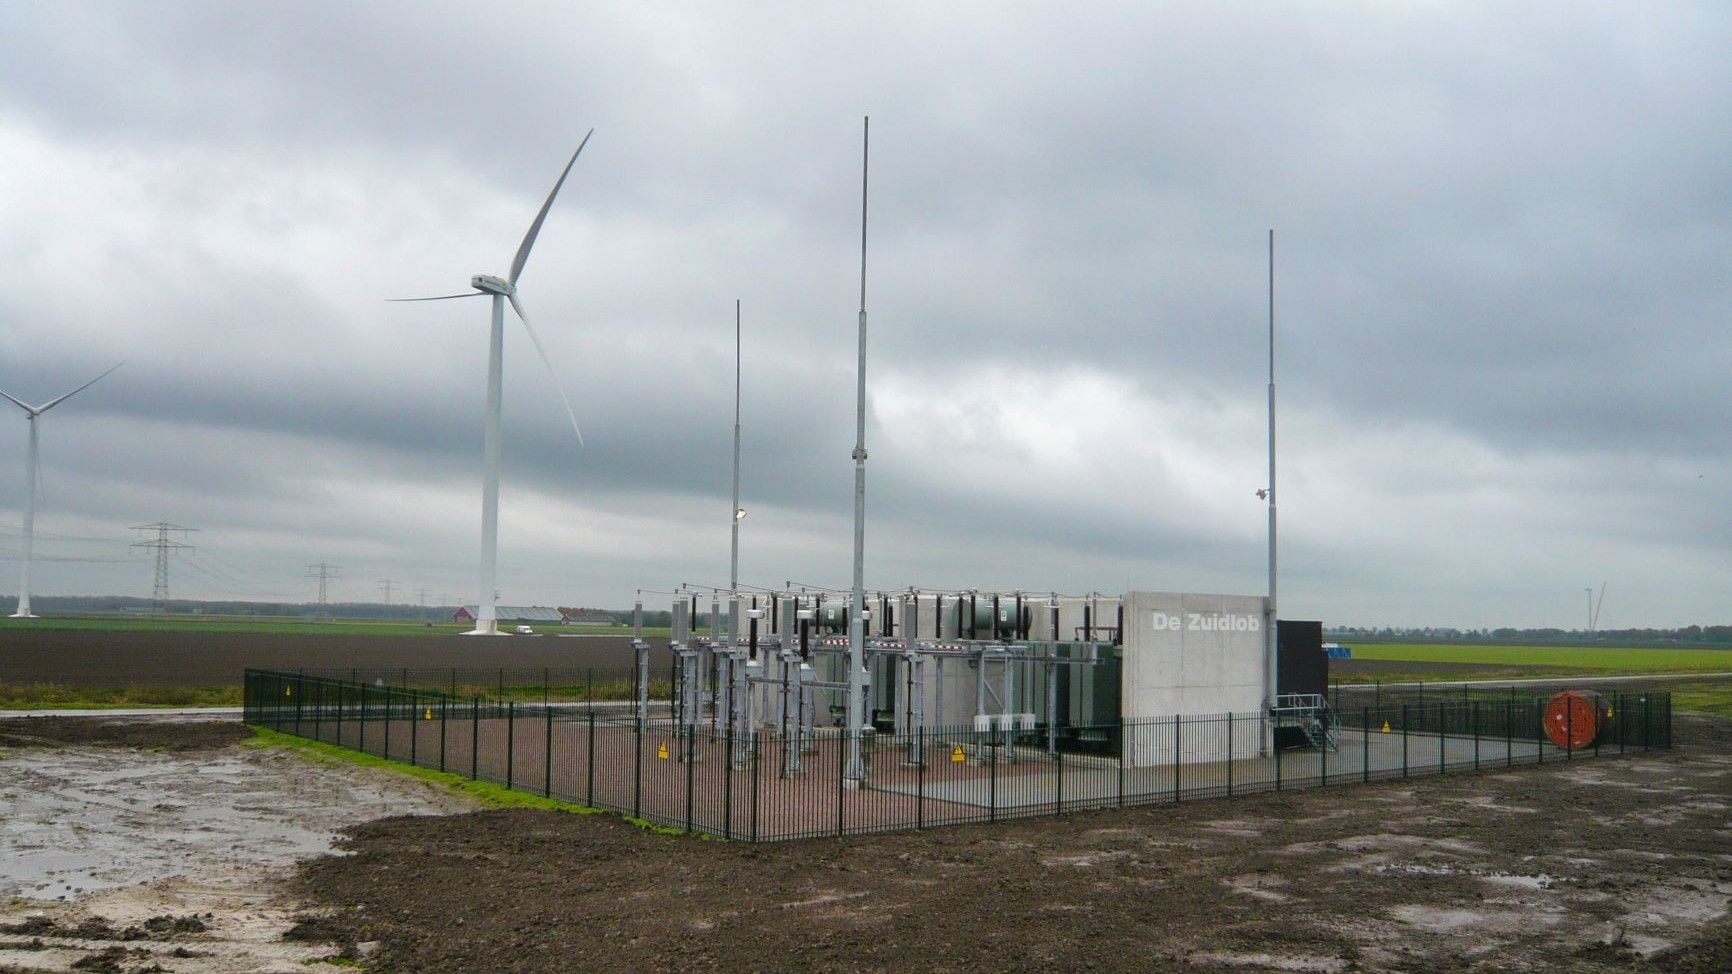 Zuidlob wind farm onshore high voltage substation